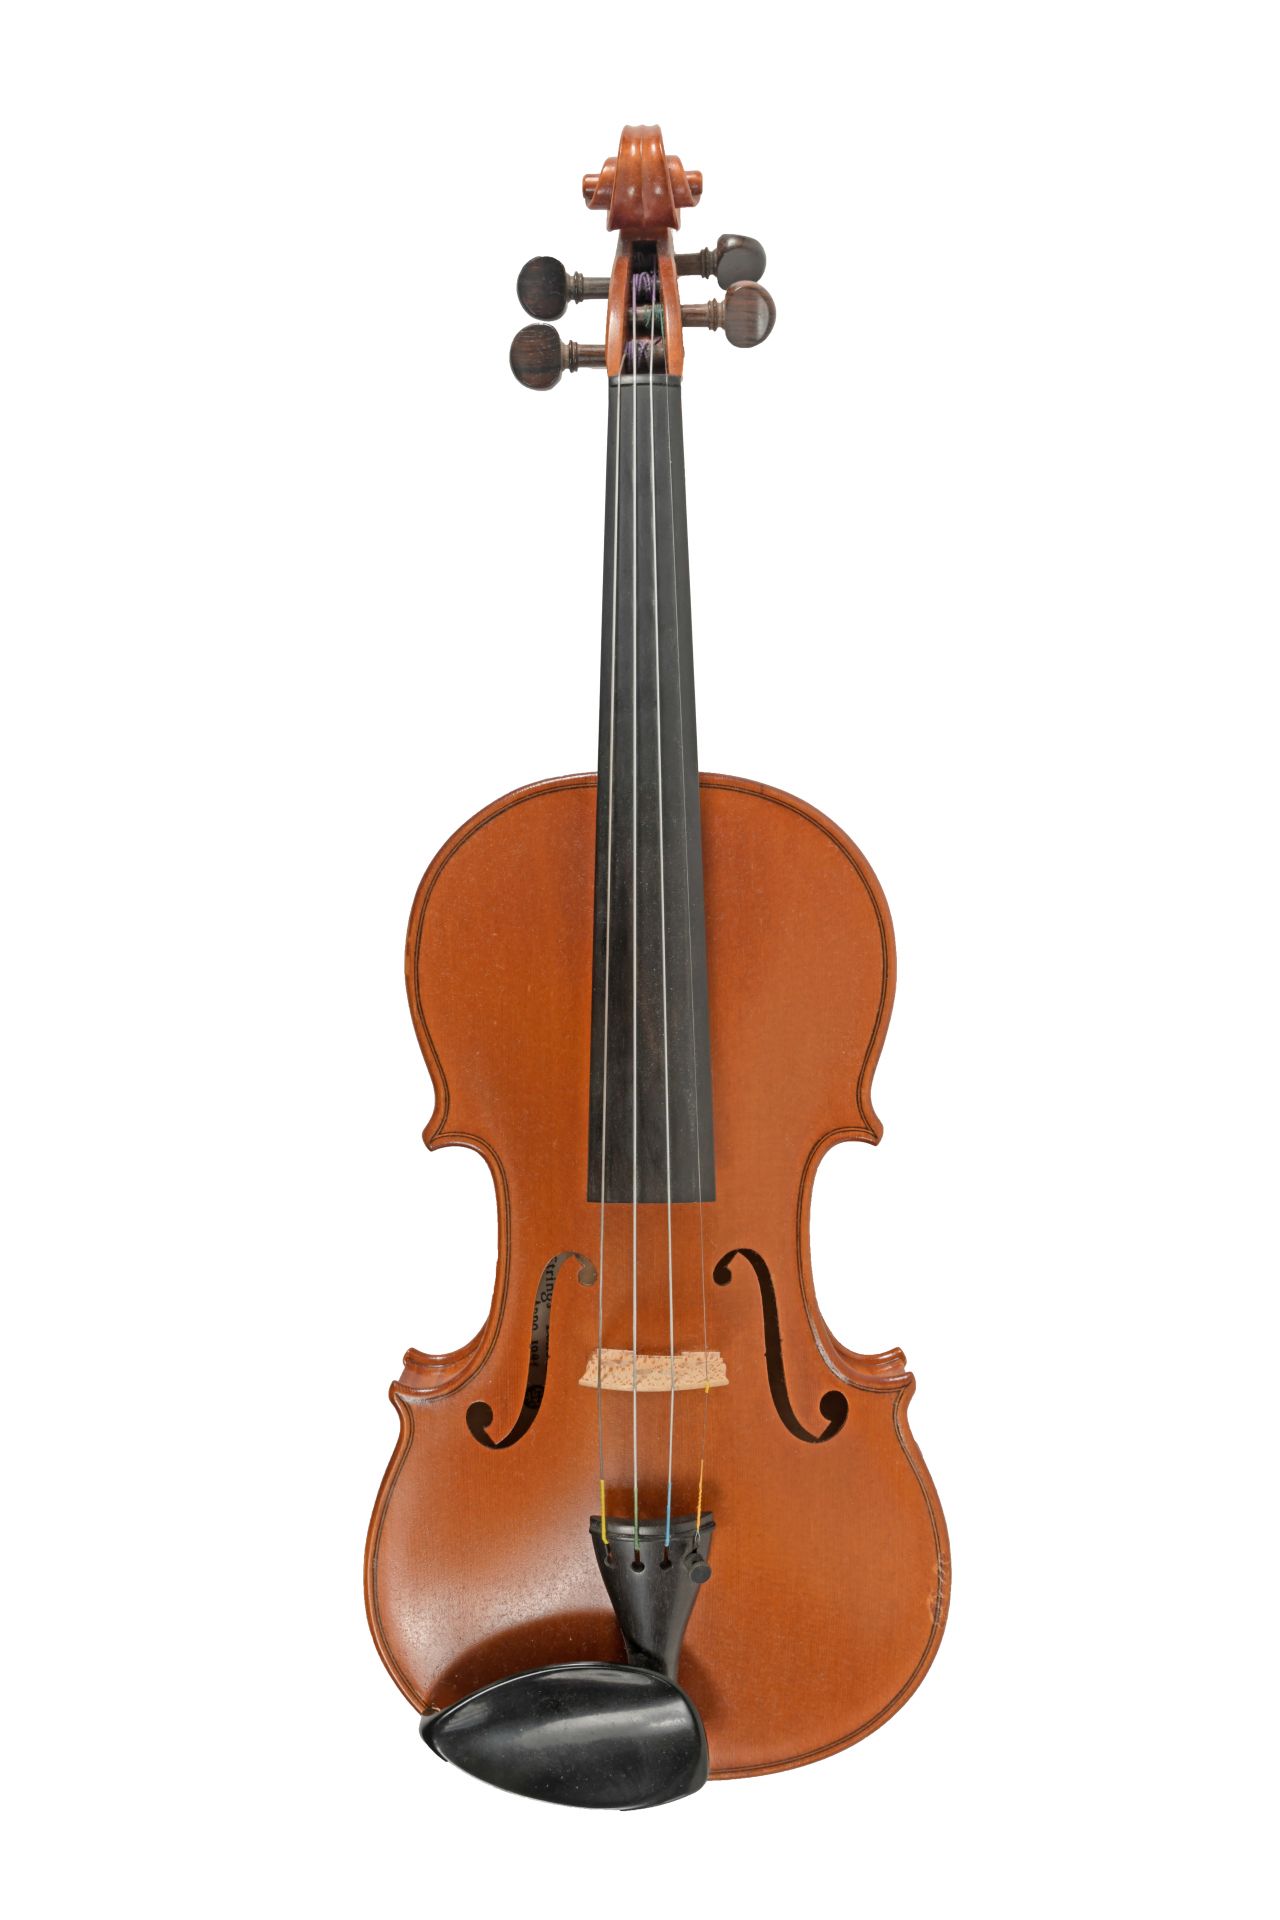 Michael Taylor violin